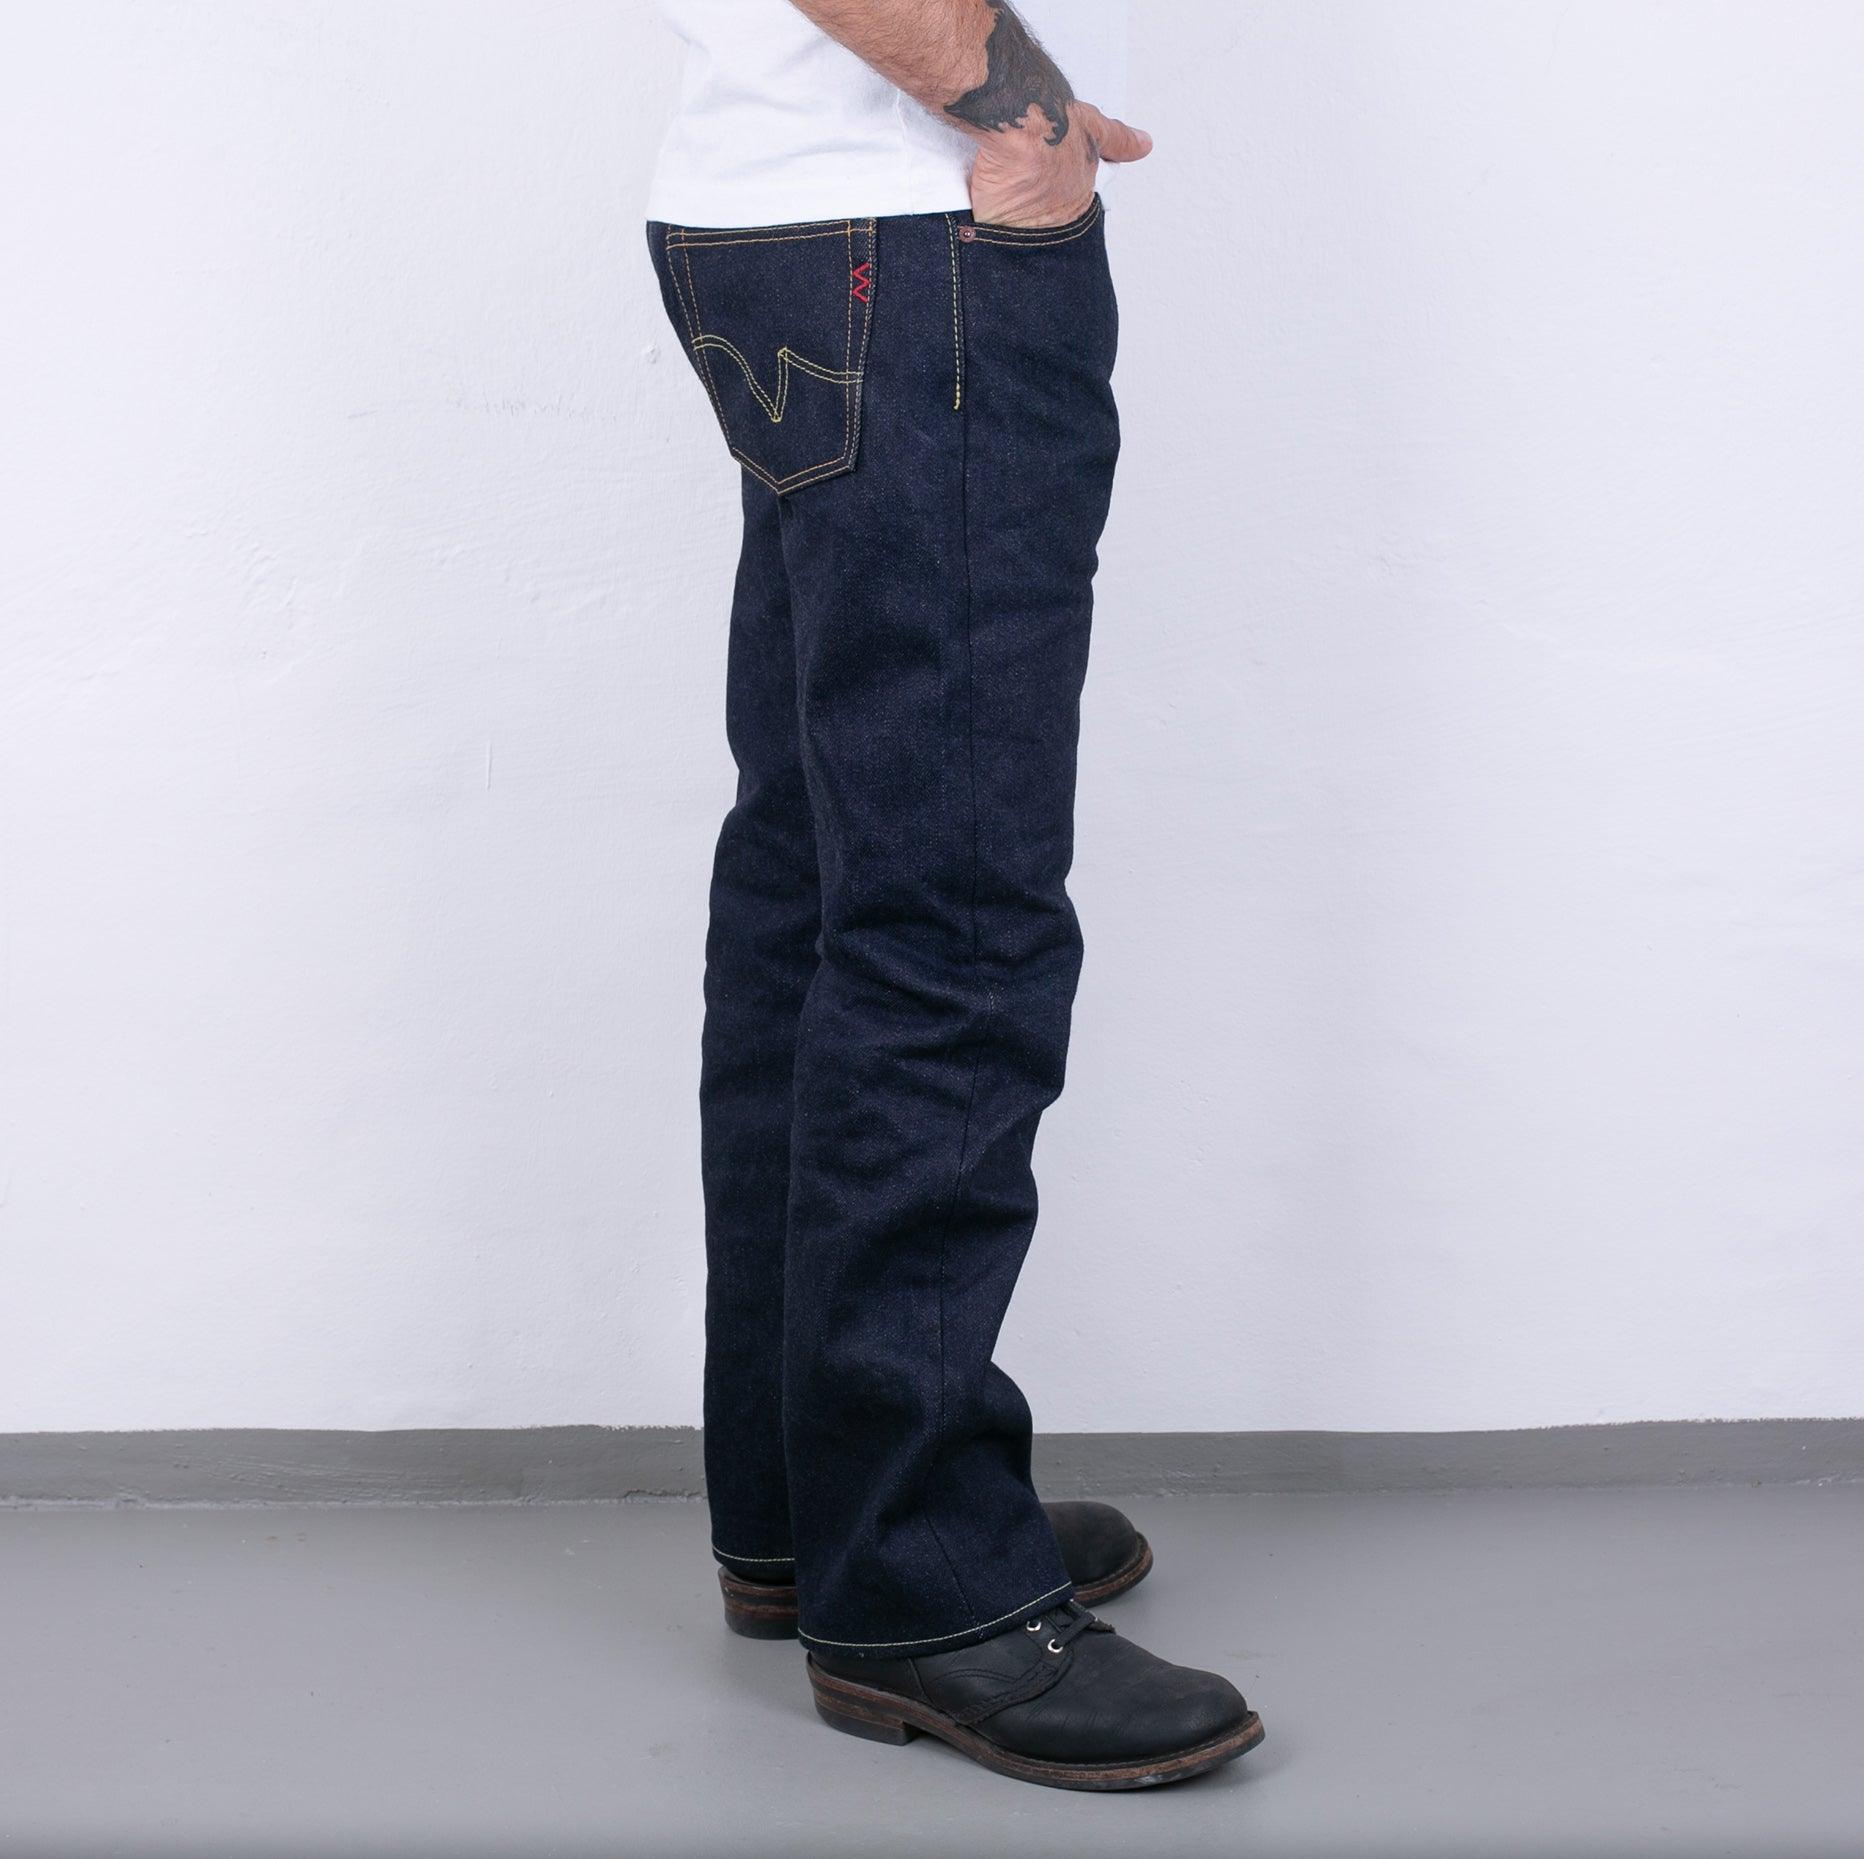 IH-634S-UHR - 21/23oz Raw Selvedge Denim Straight Cut Jeans Indigo